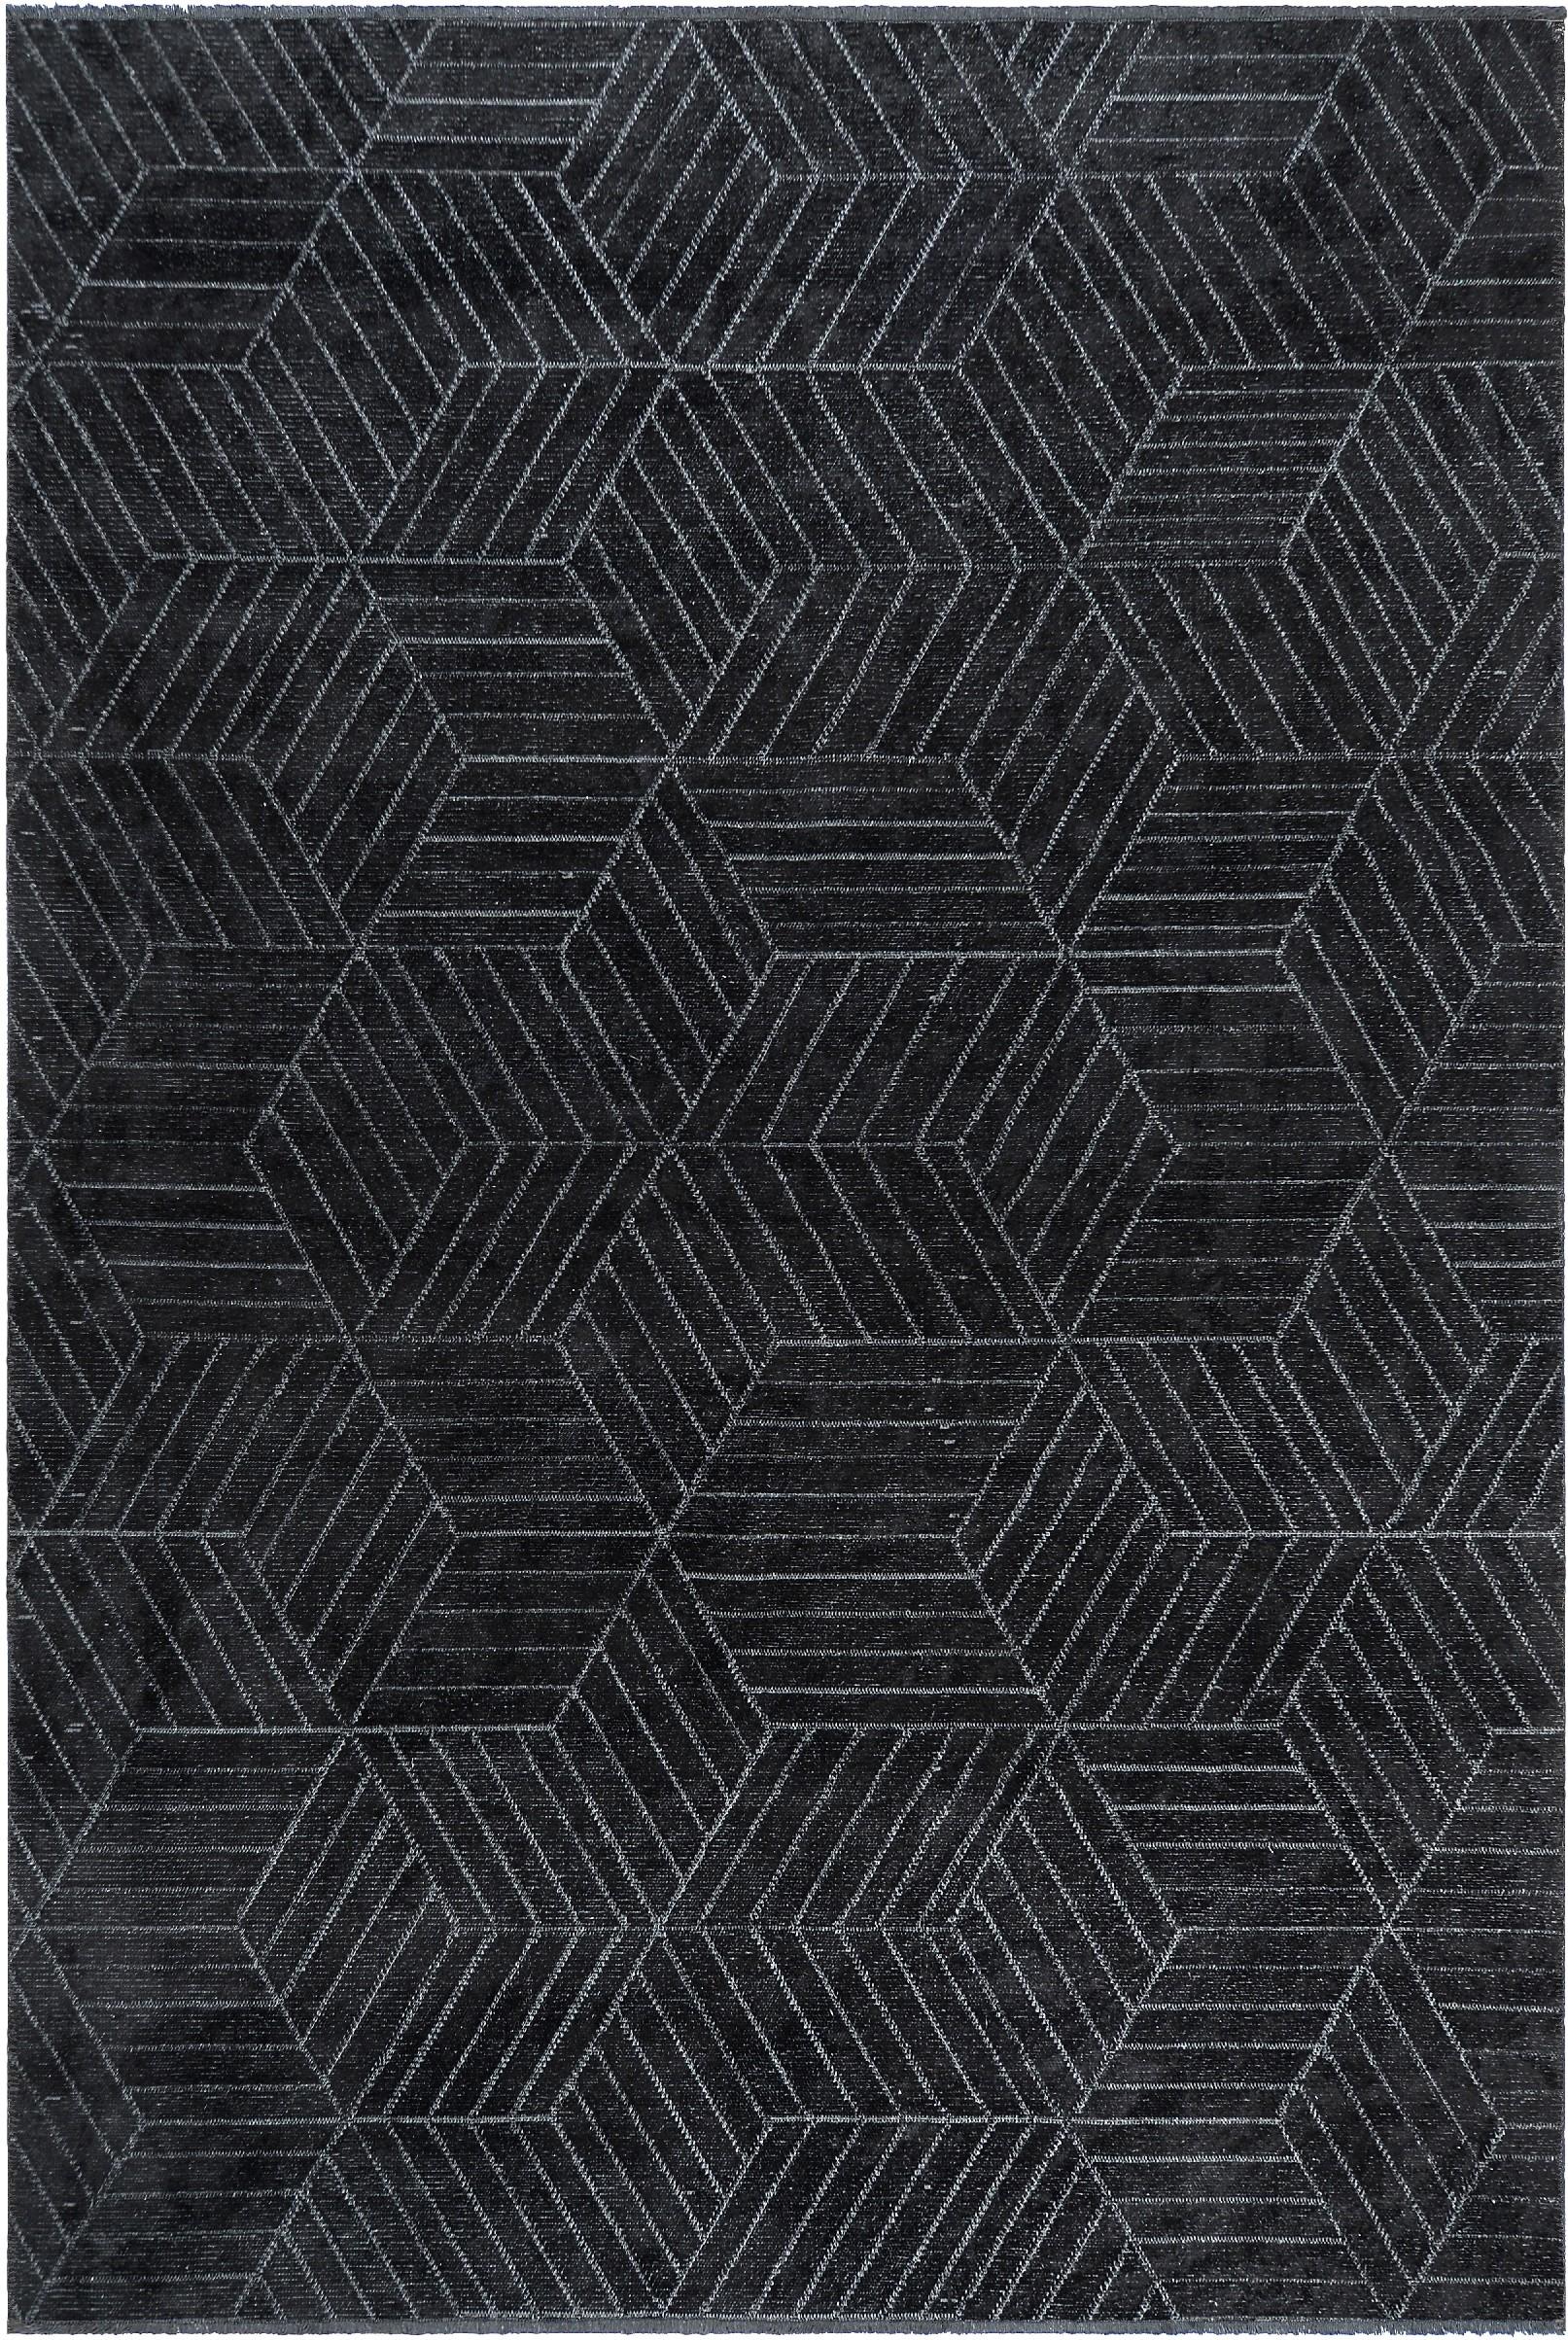 For Sale:  (Black) Contemporary Geometric Luxury Area Rug